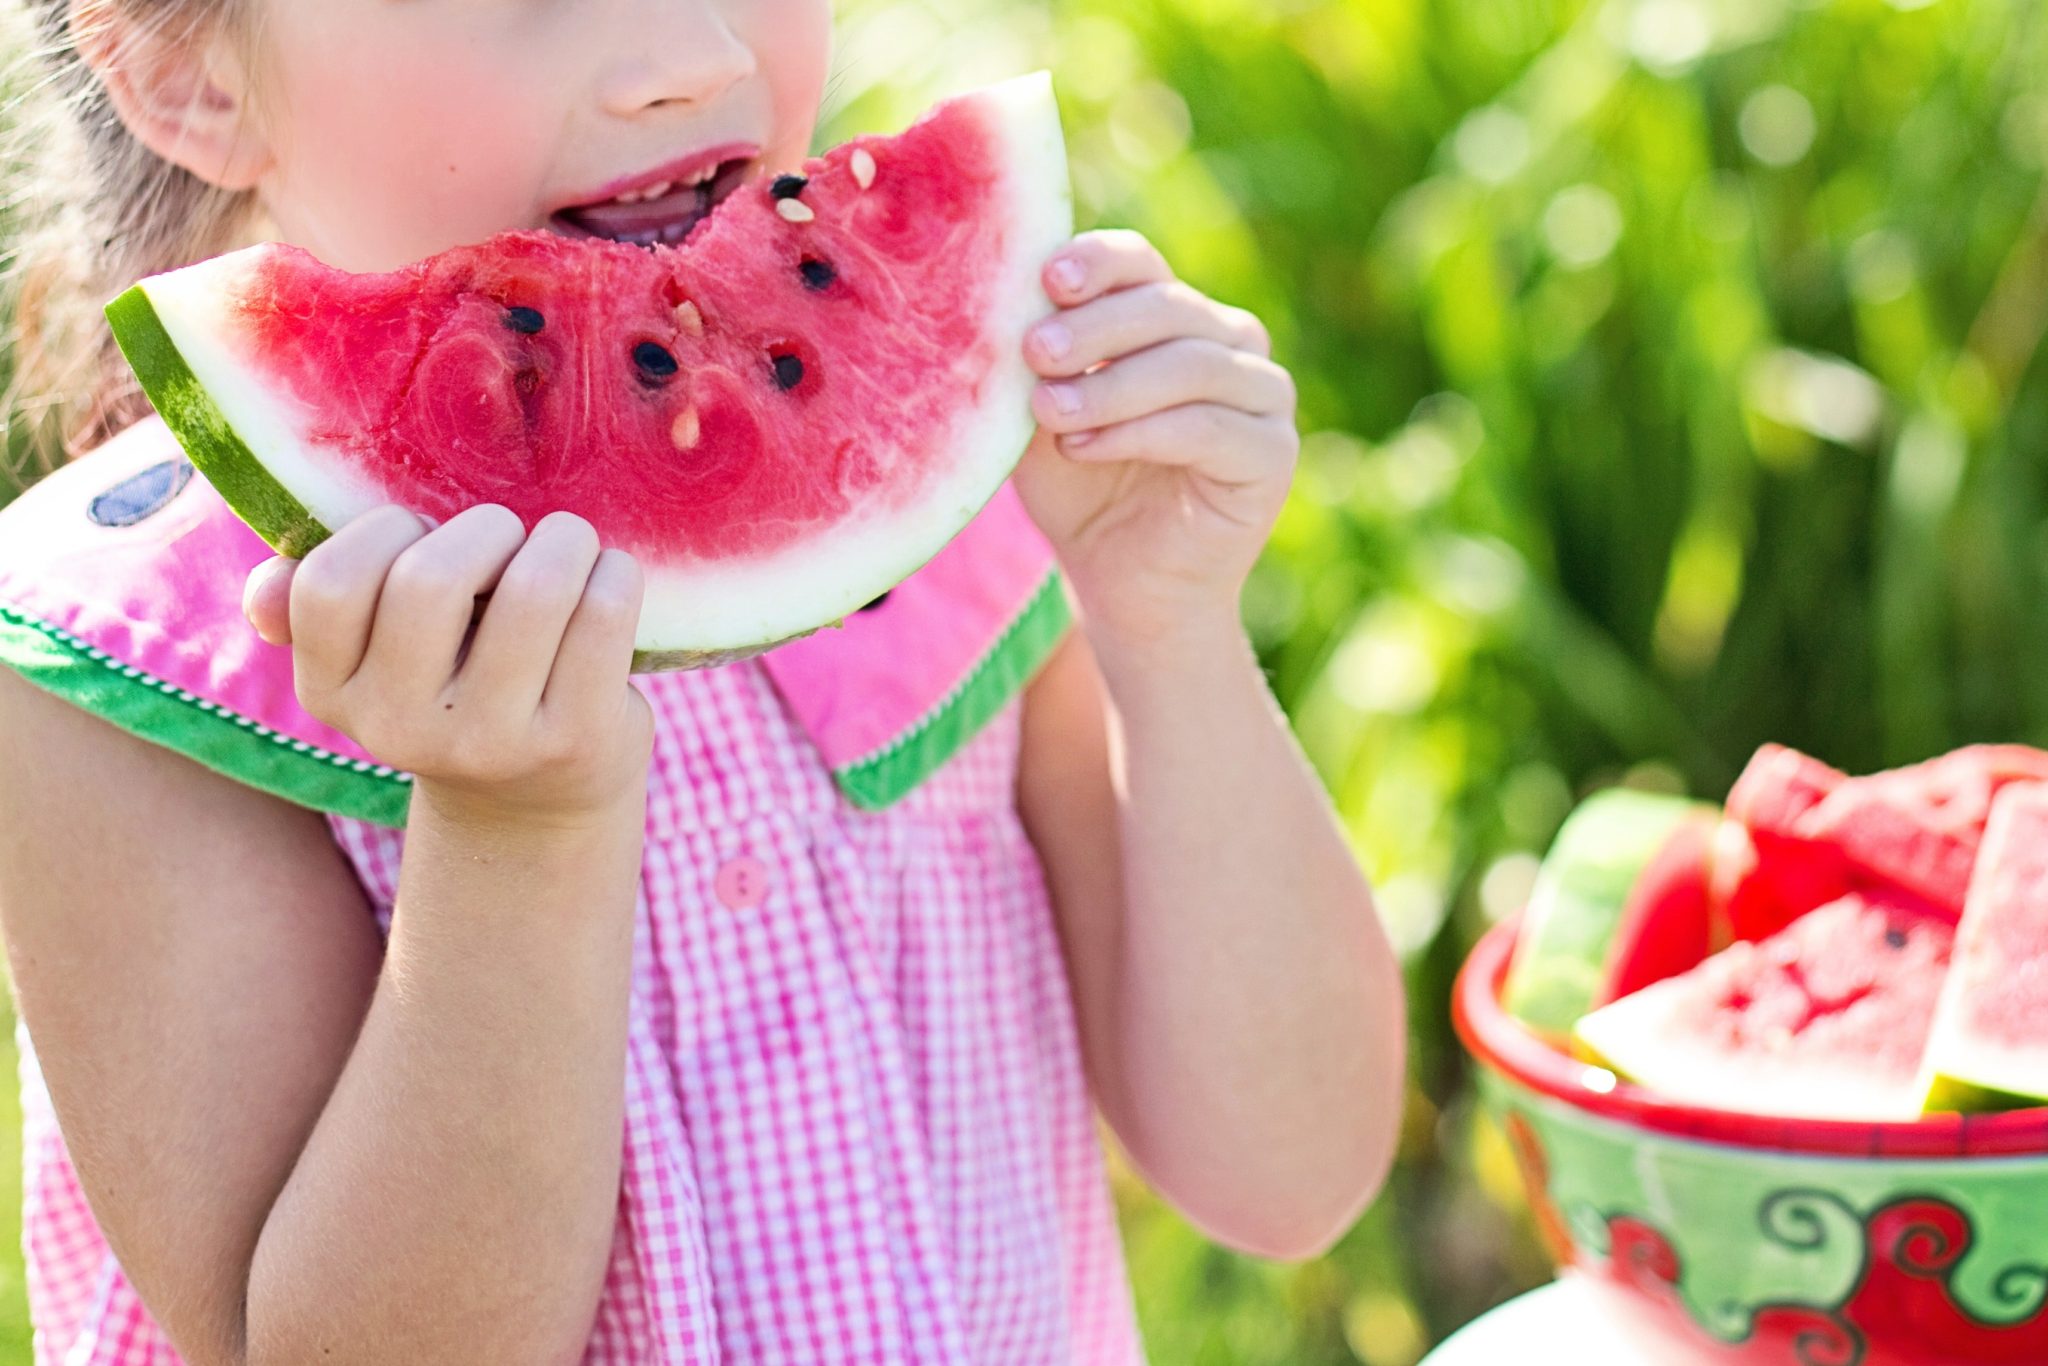 A little girl eating water melon